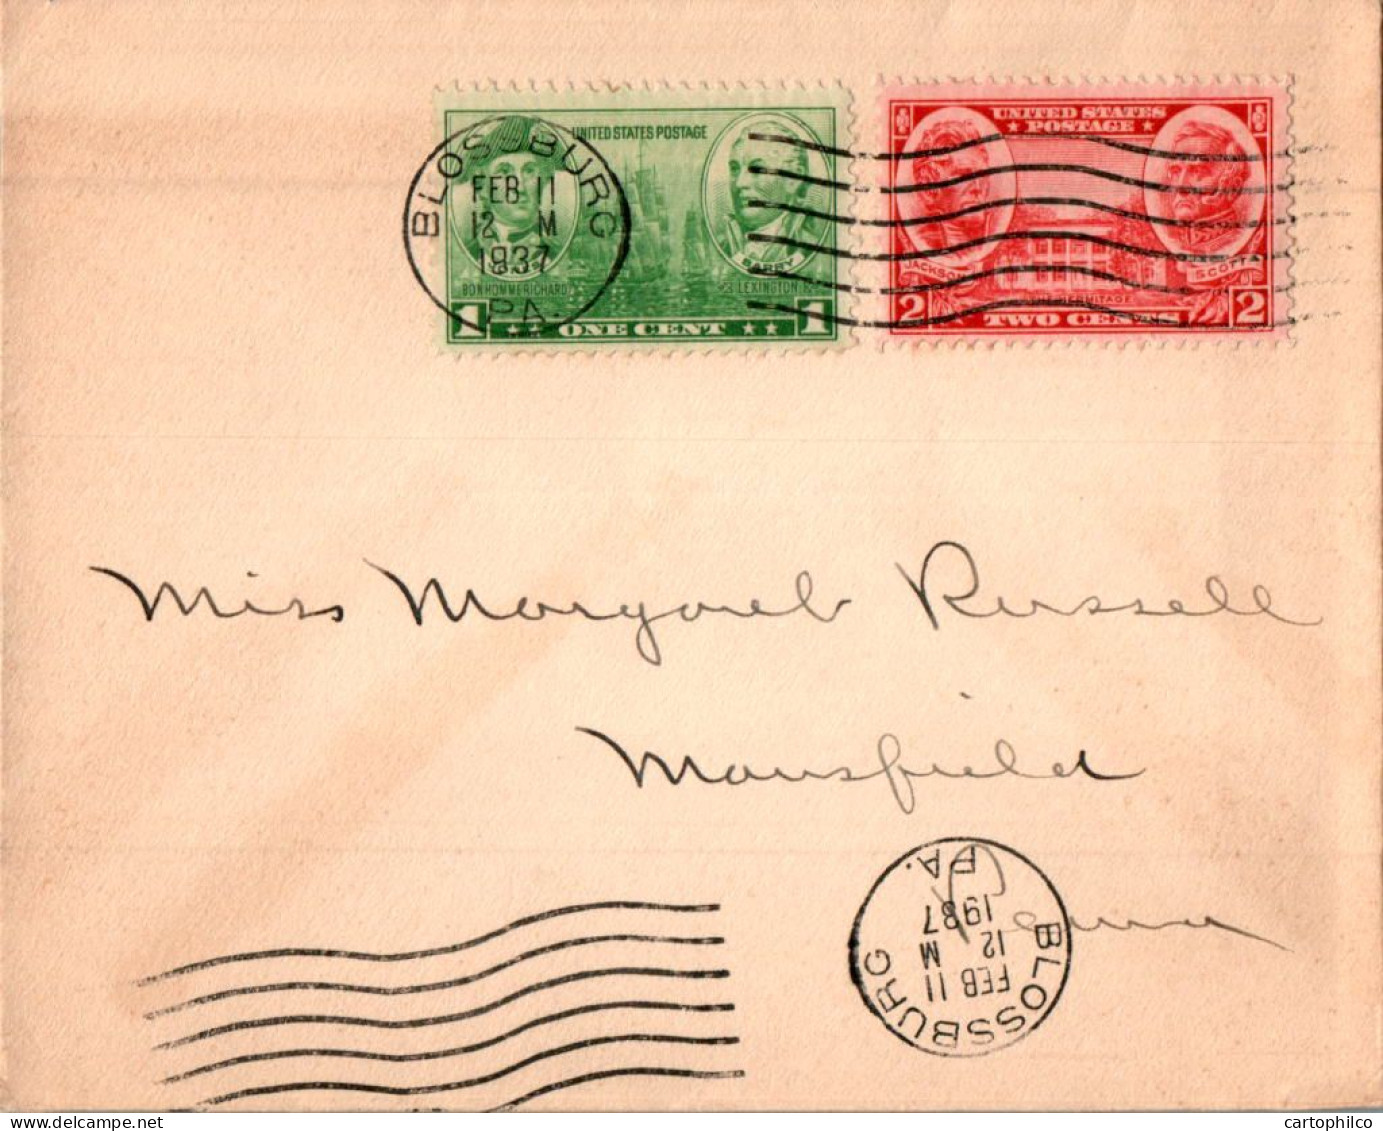 US Cover Ermitage Blossburg 1937  For Mansfield Pa - Briefe U. Dokumente